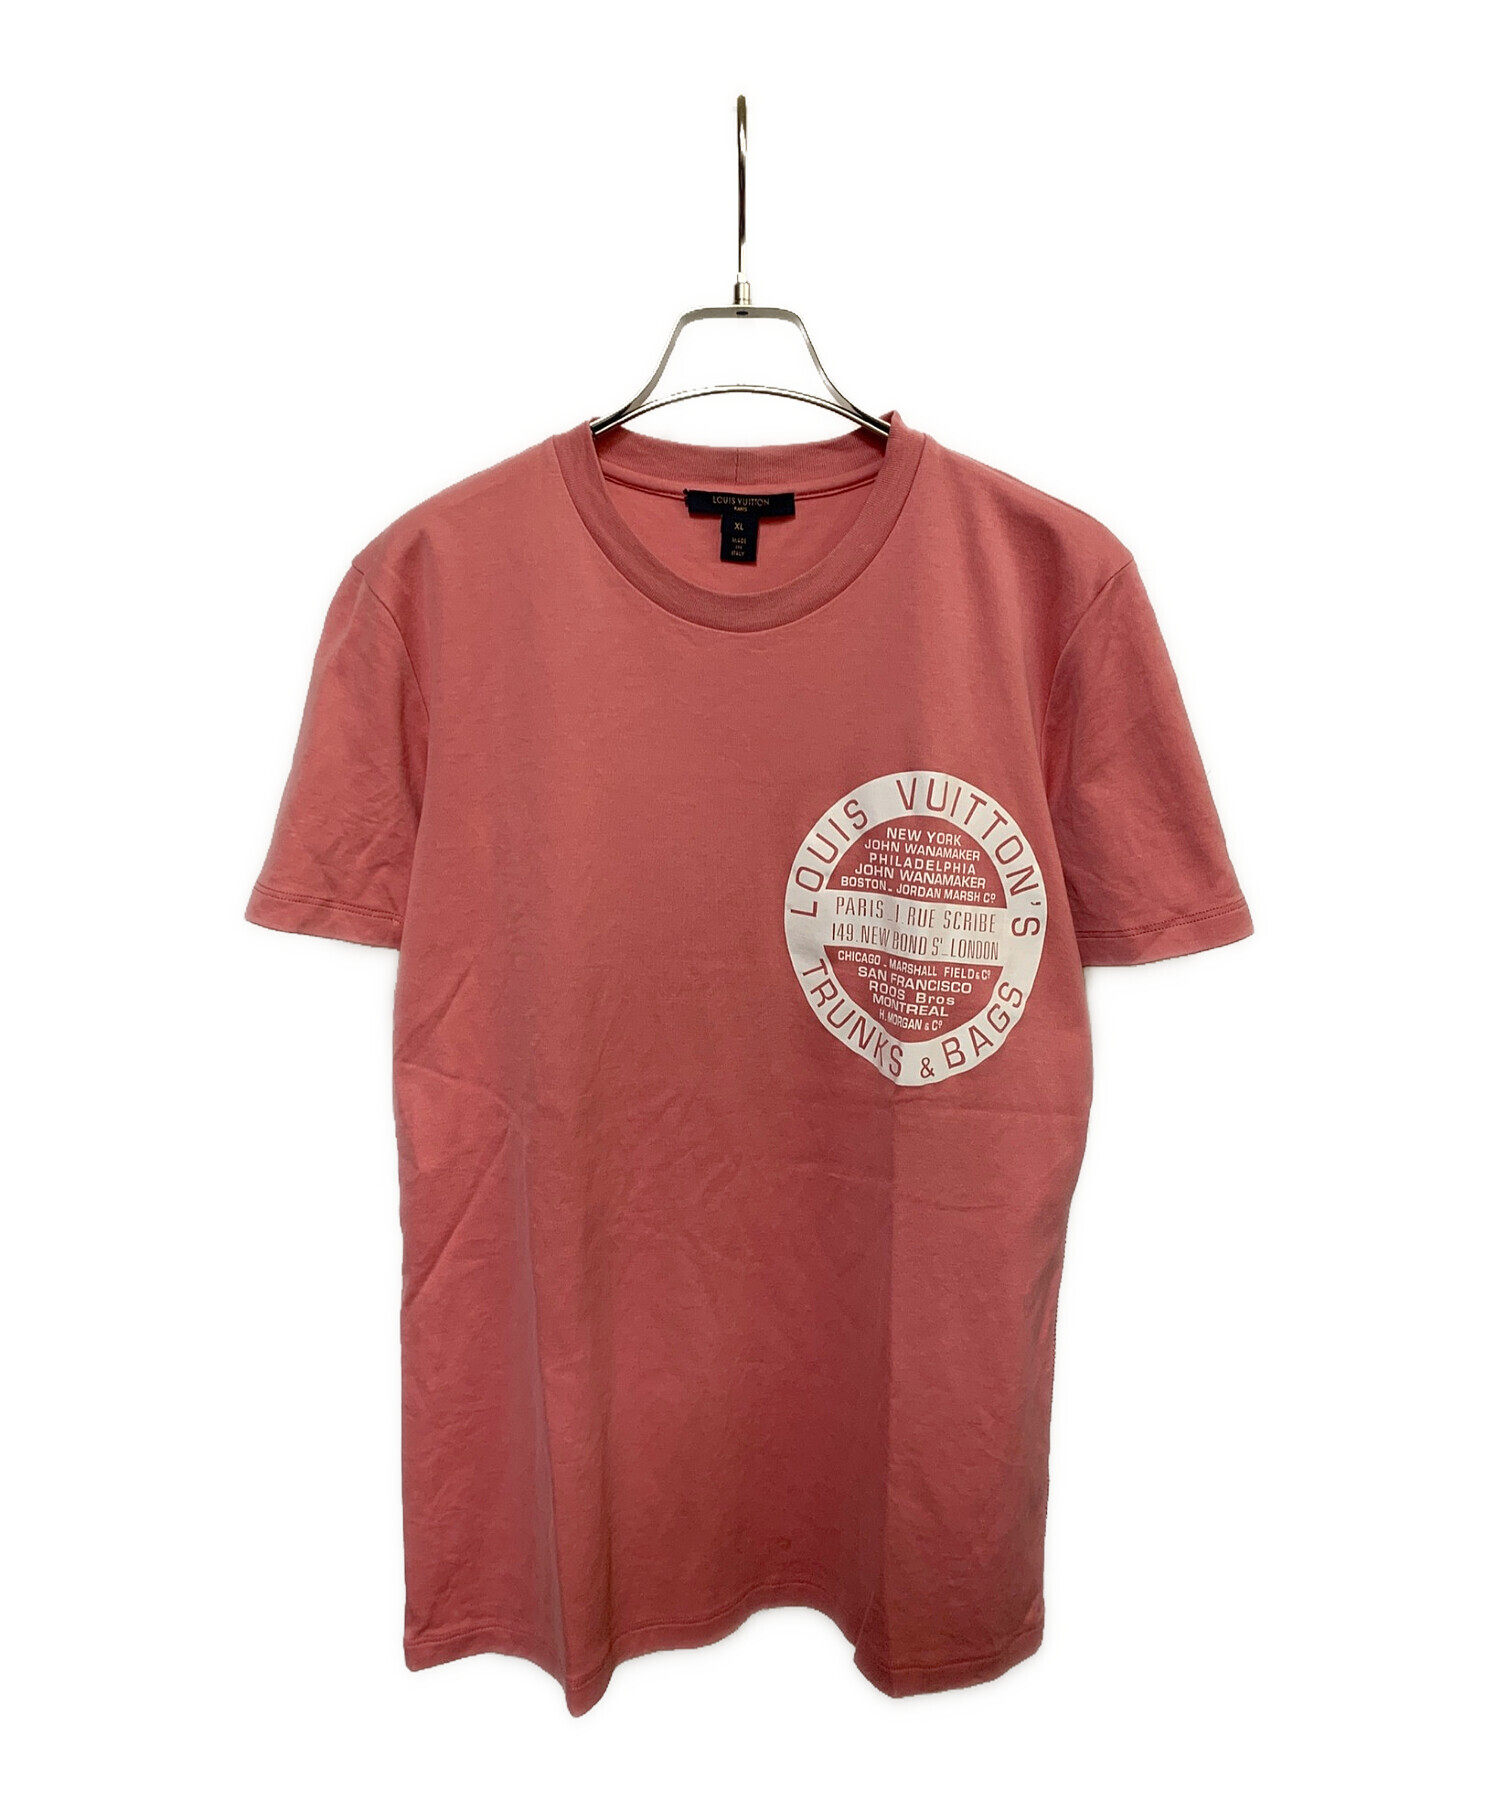 LOUIS VUITTON (ルイ ヴィトン) スタンプロゴTシャツ ピンク サイズ:XL